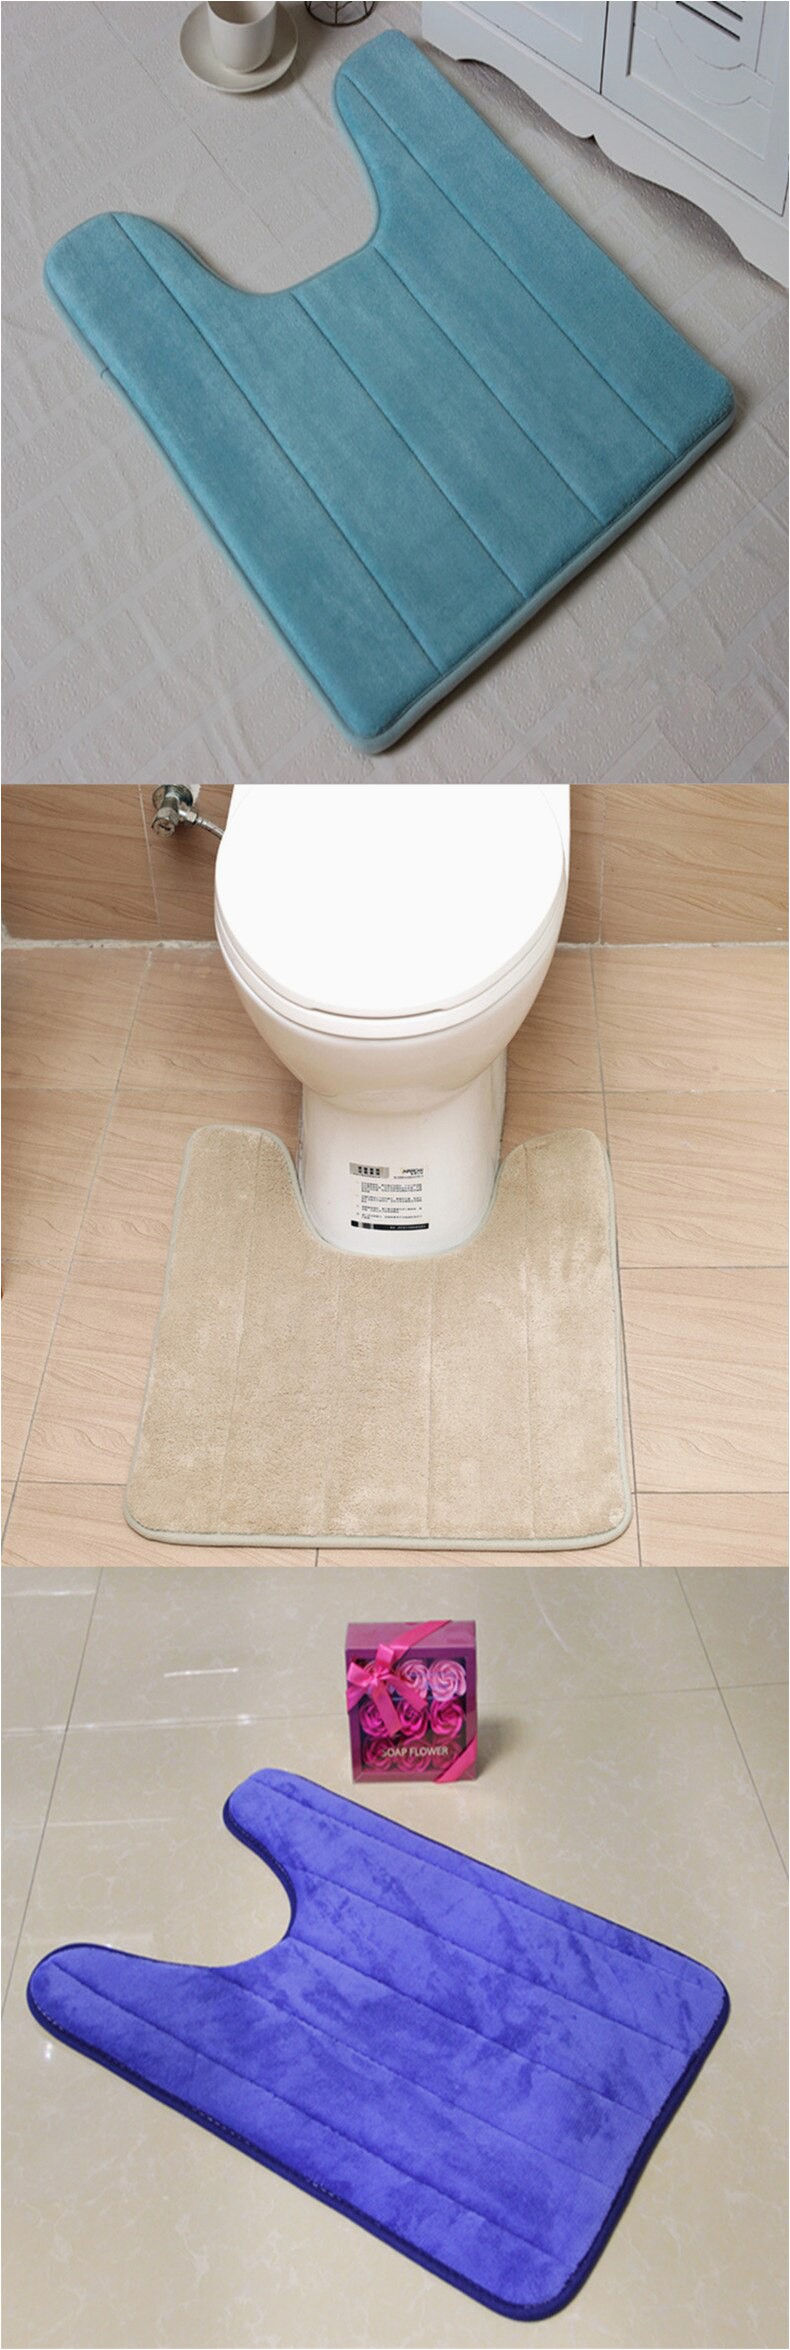 Memory Foam Rug Bathroom Memory Foam U Shape toilet Rug Water Absorption Bathroom Carpet soft Foot Pad Home Decor Flannel Bath Mat Non Slip Pedestal Rugs